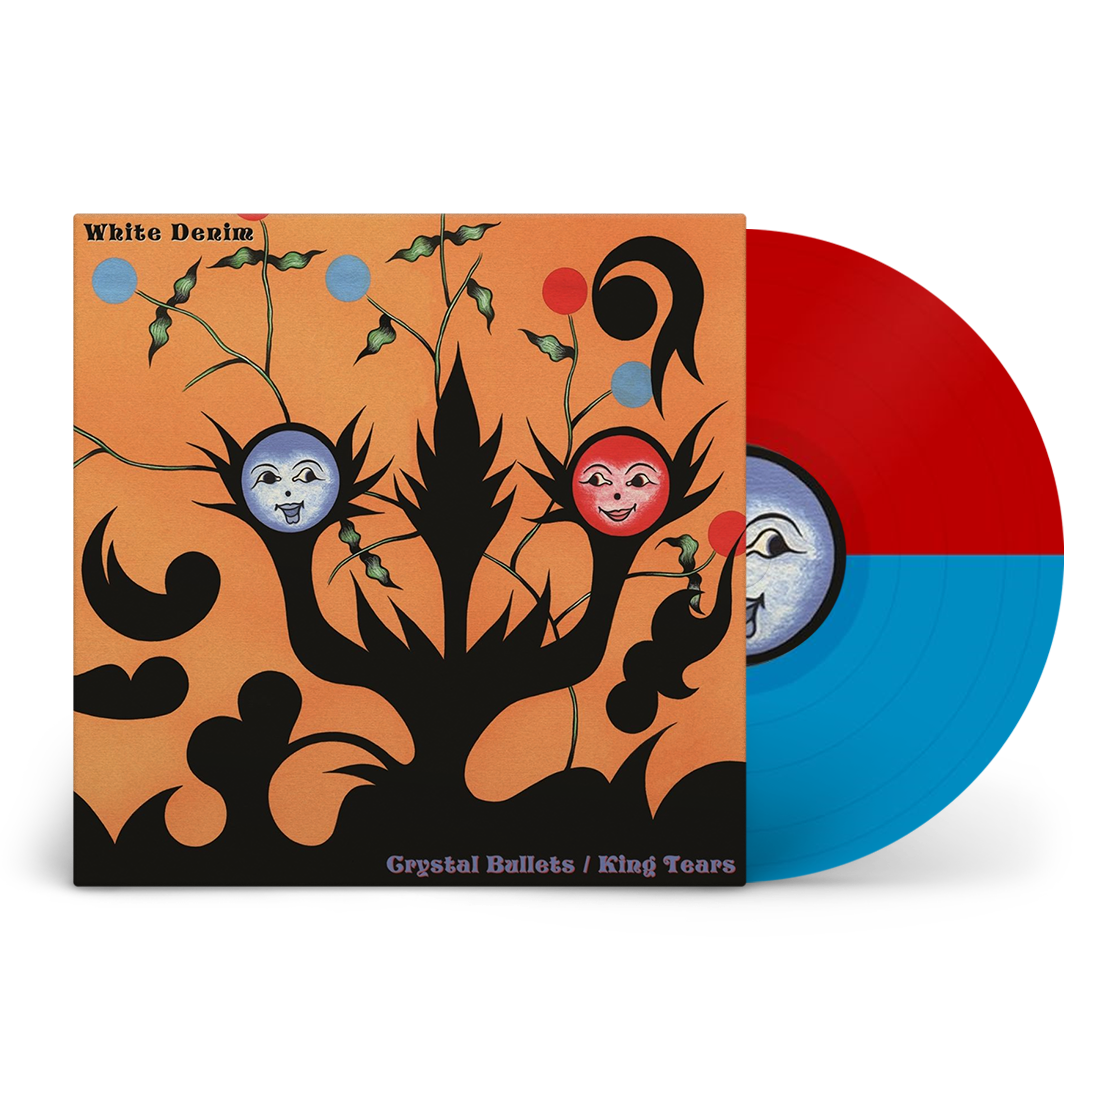 Crystal Bullets / King Tears: Limited Edition Red + Blue Split Colour Vinyl LP